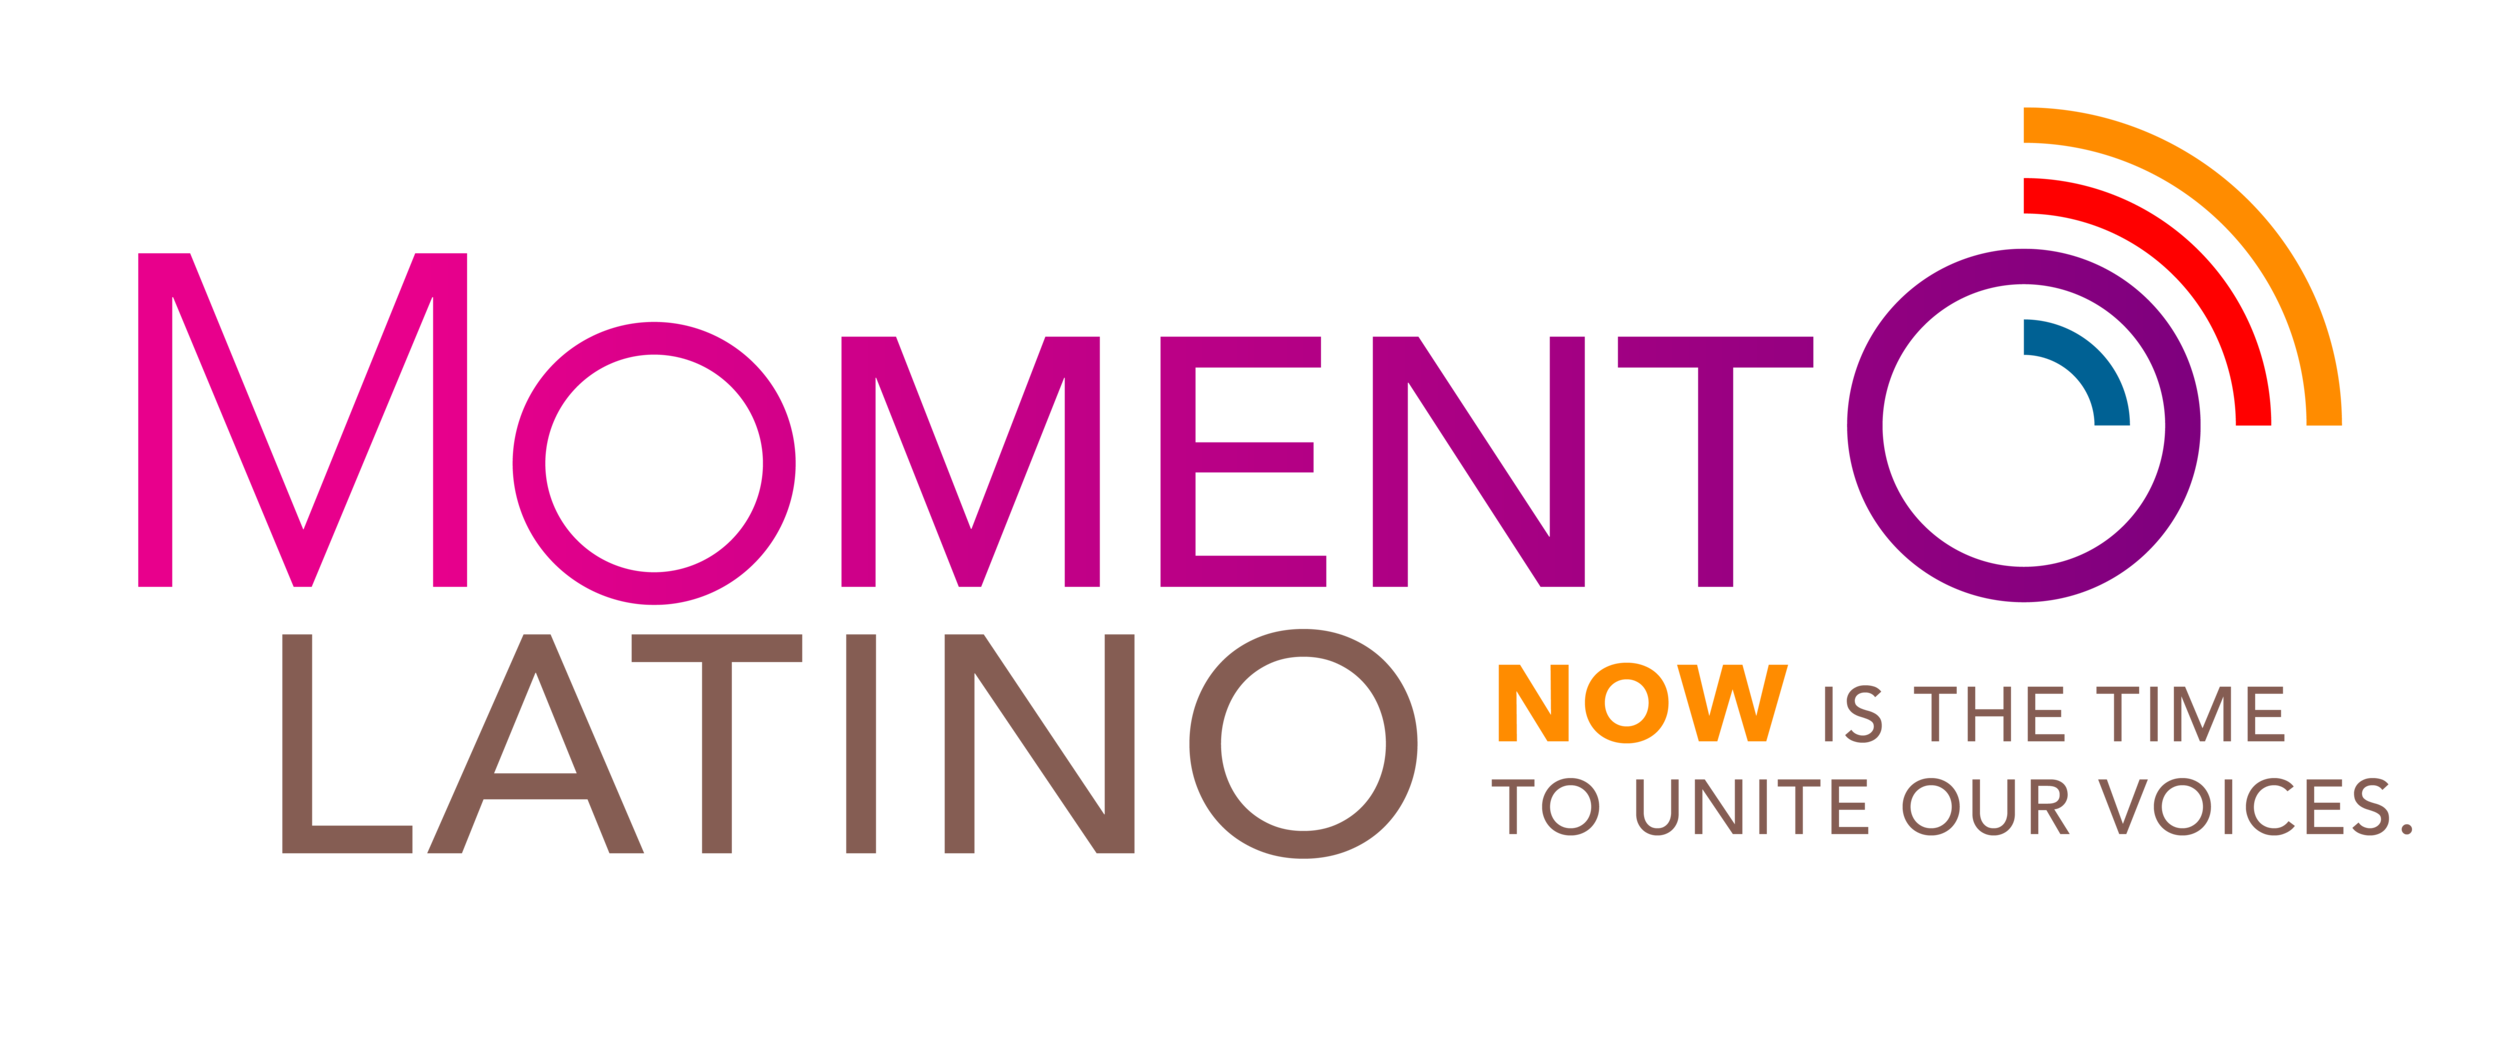 Momento Latino Logo.png